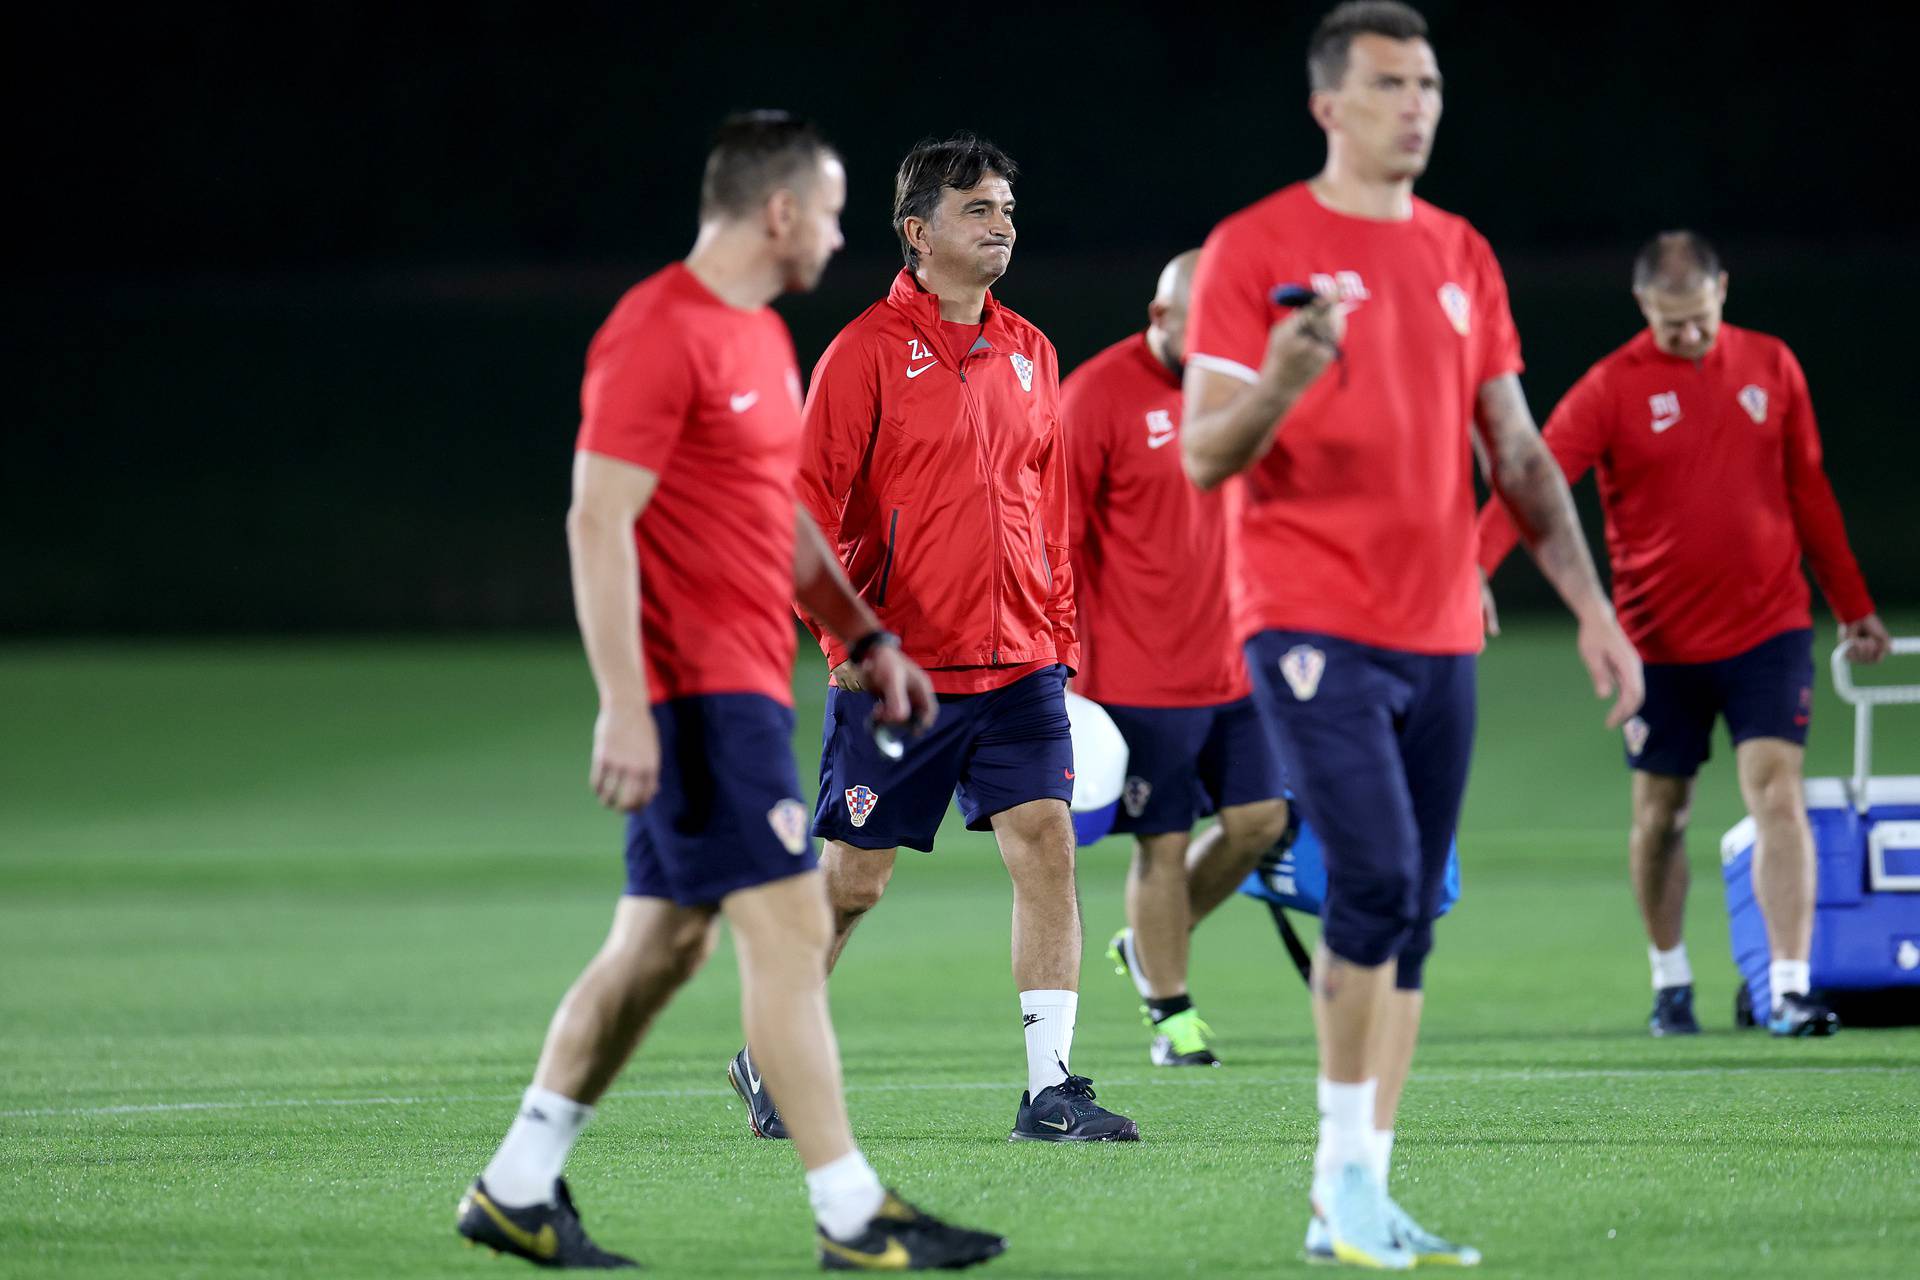 KATAR 2022 - Trening hrvatske nogometne reprezentacije